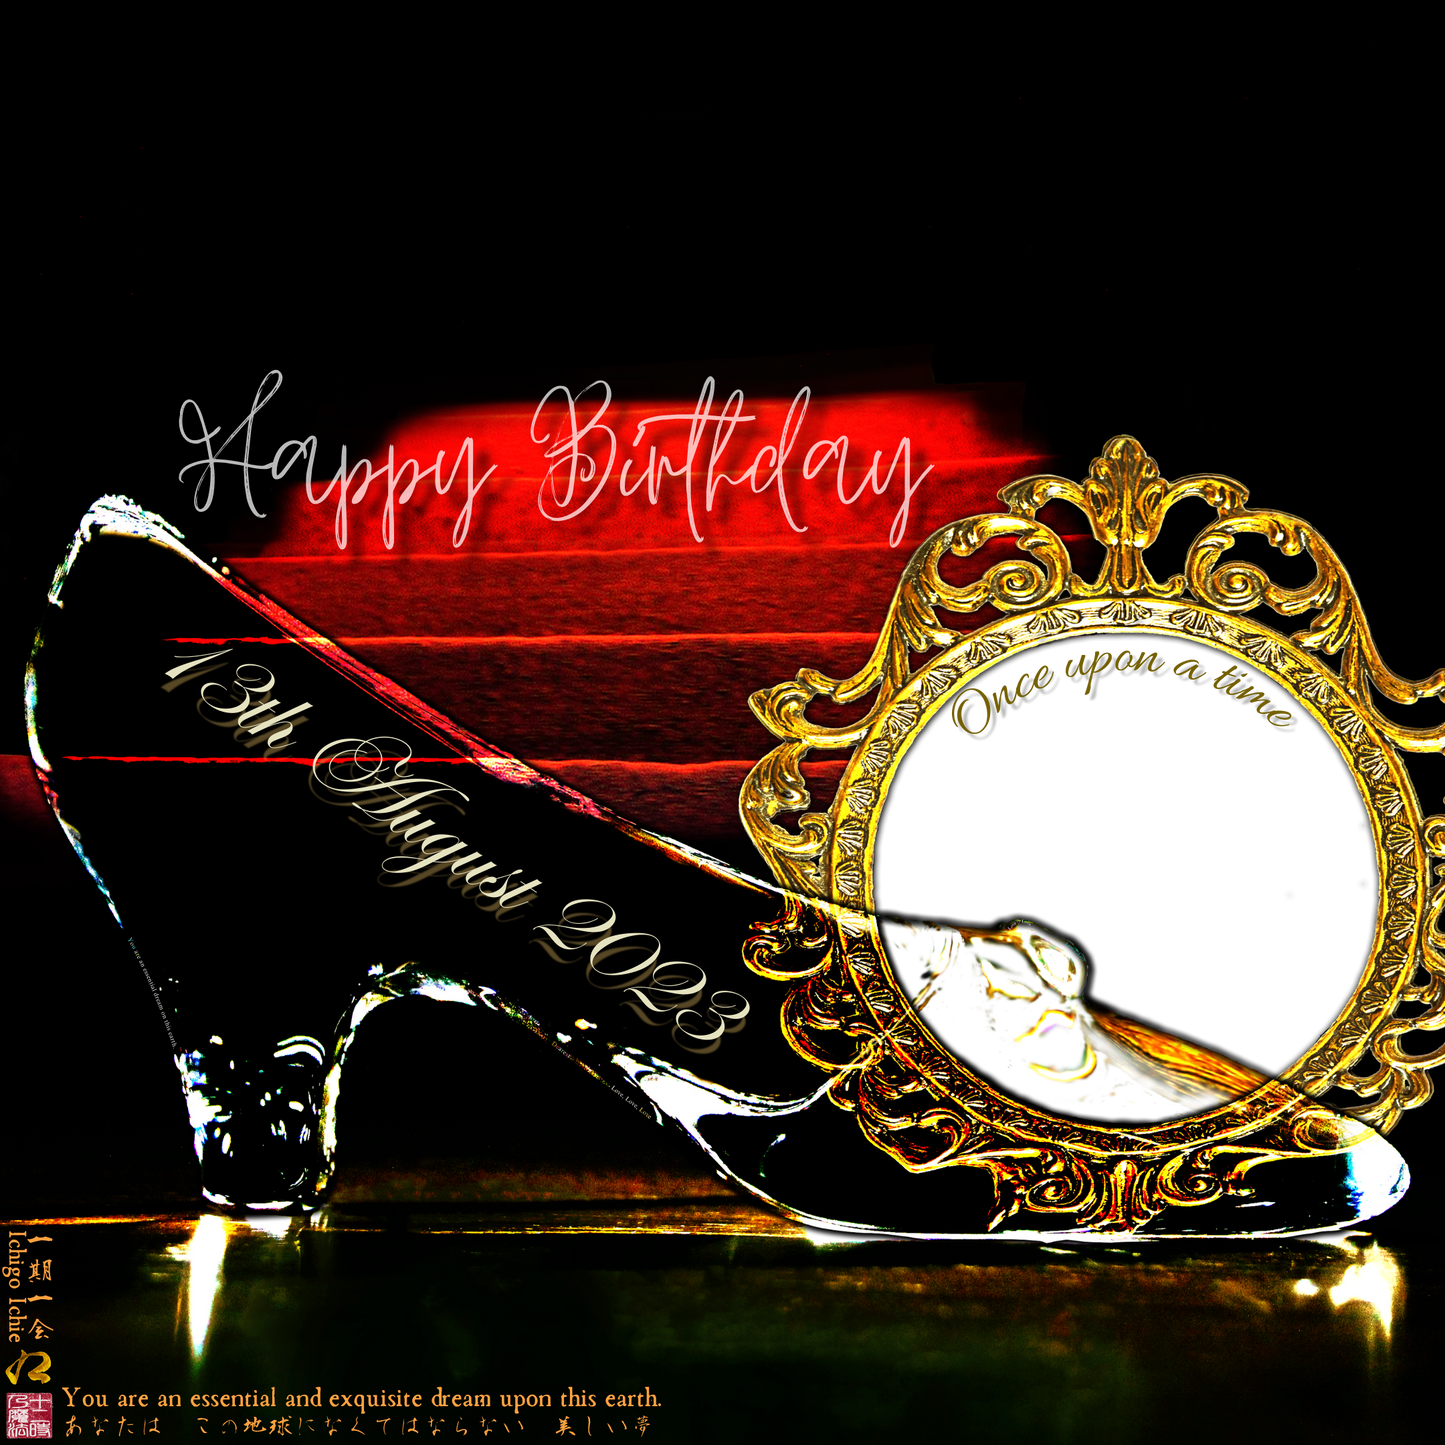 Happy Birthday Glass Slipper "Ichigo Ichie" 13th August 2023 the Right (1-of-1) NFT Art